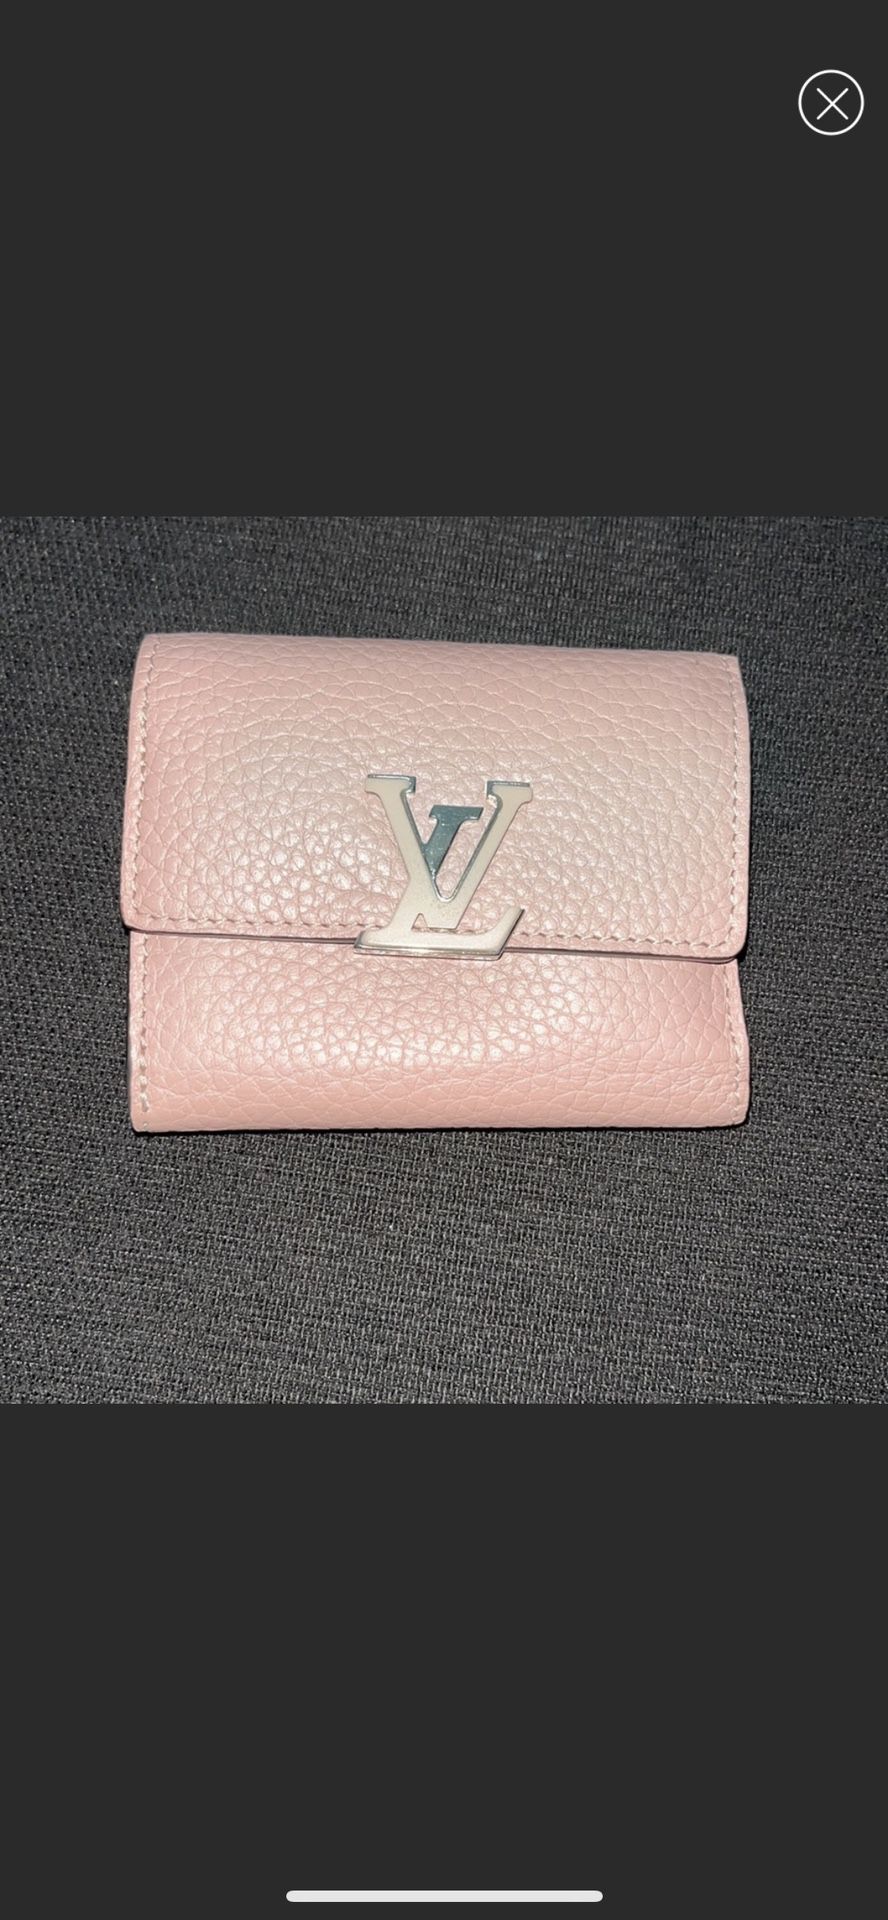 Louis Vuitton Capucines Compact Wallet for Sale in Oakland Park, FL -  OfferUp